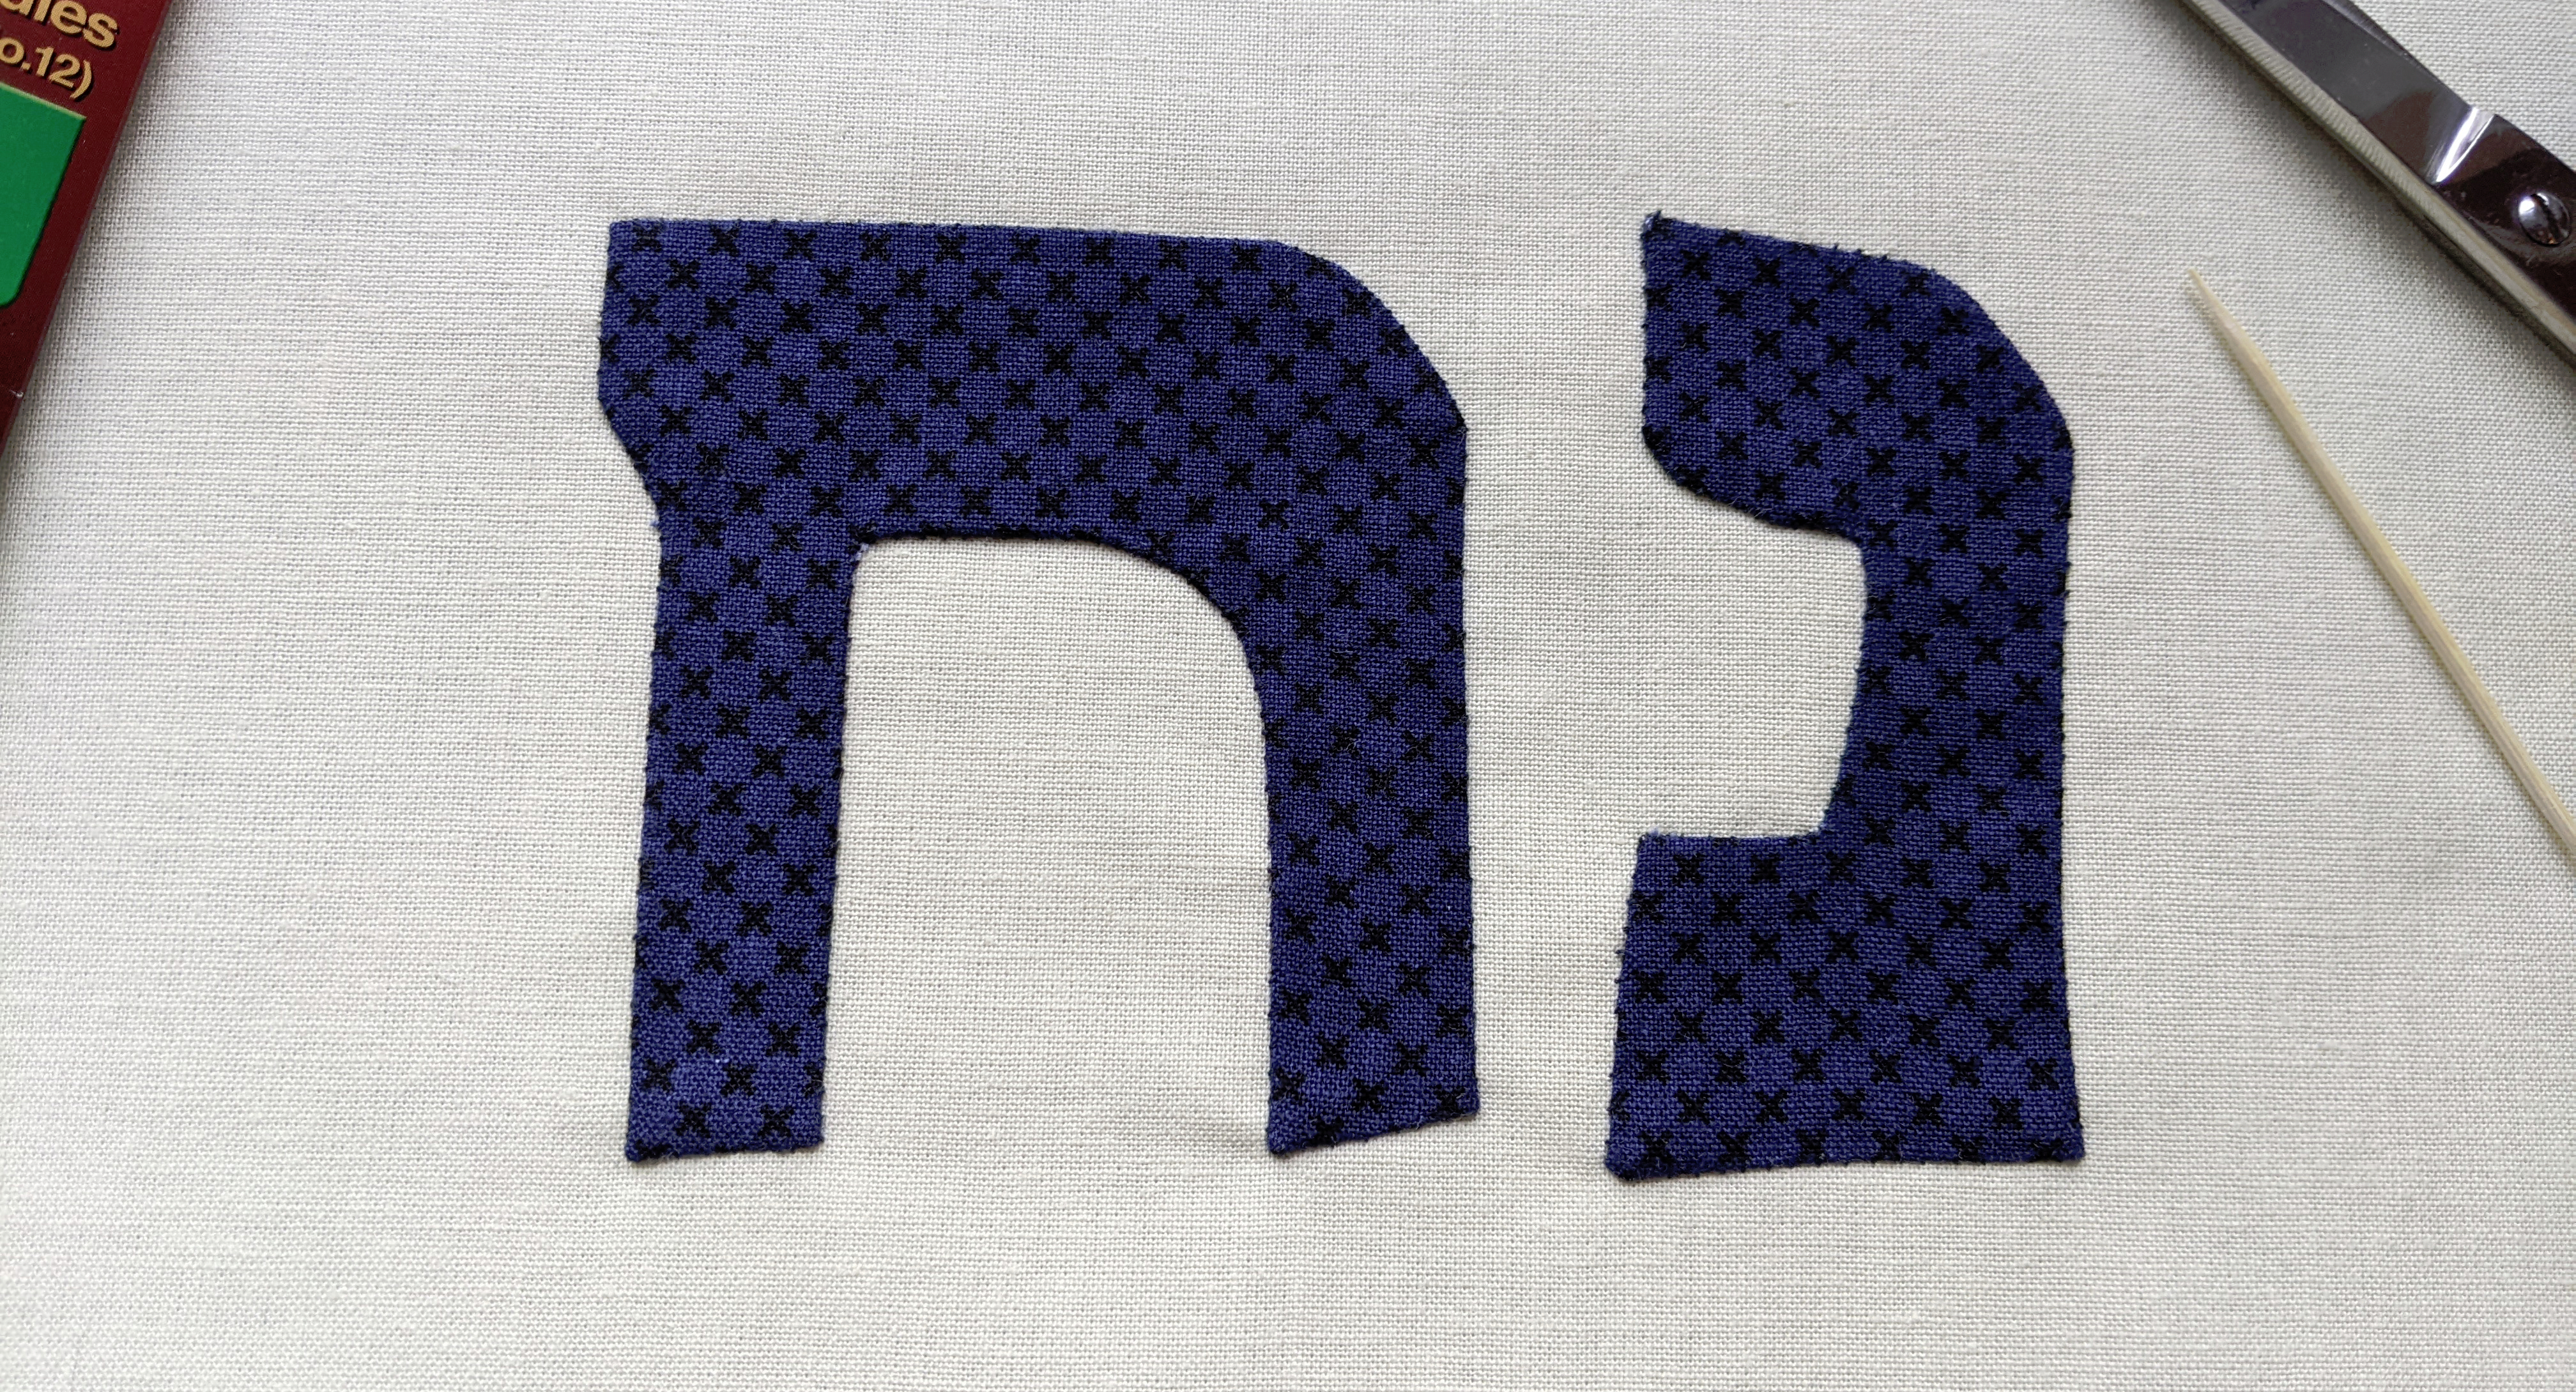 Hebrew letters applique spelling "Noah"